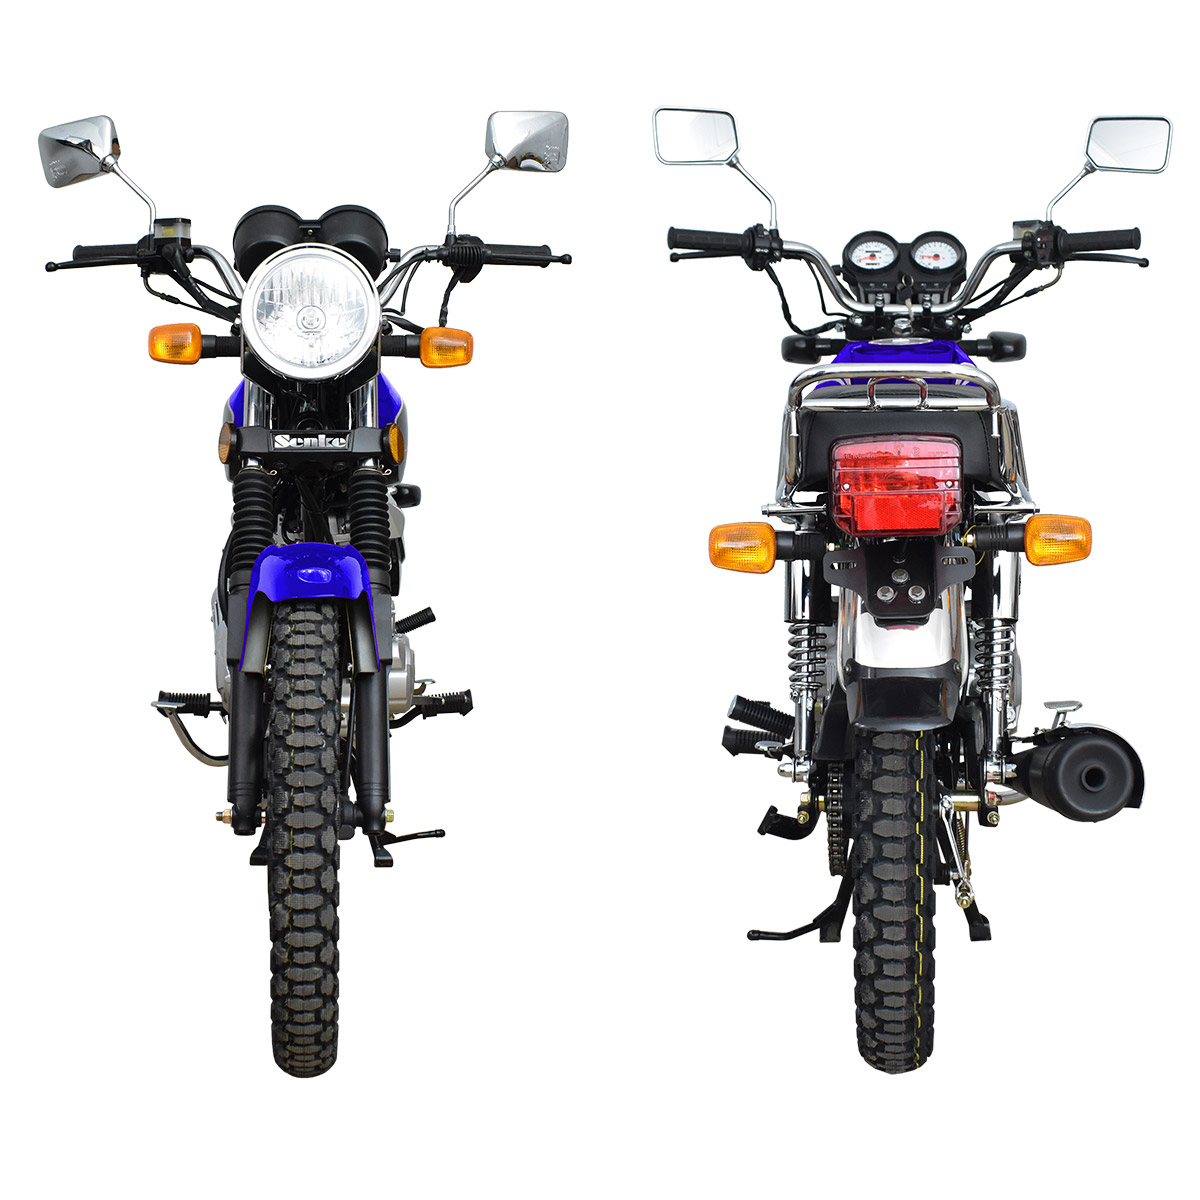 картинка Мотоцикл Regulmoto RM 125 | Moped24